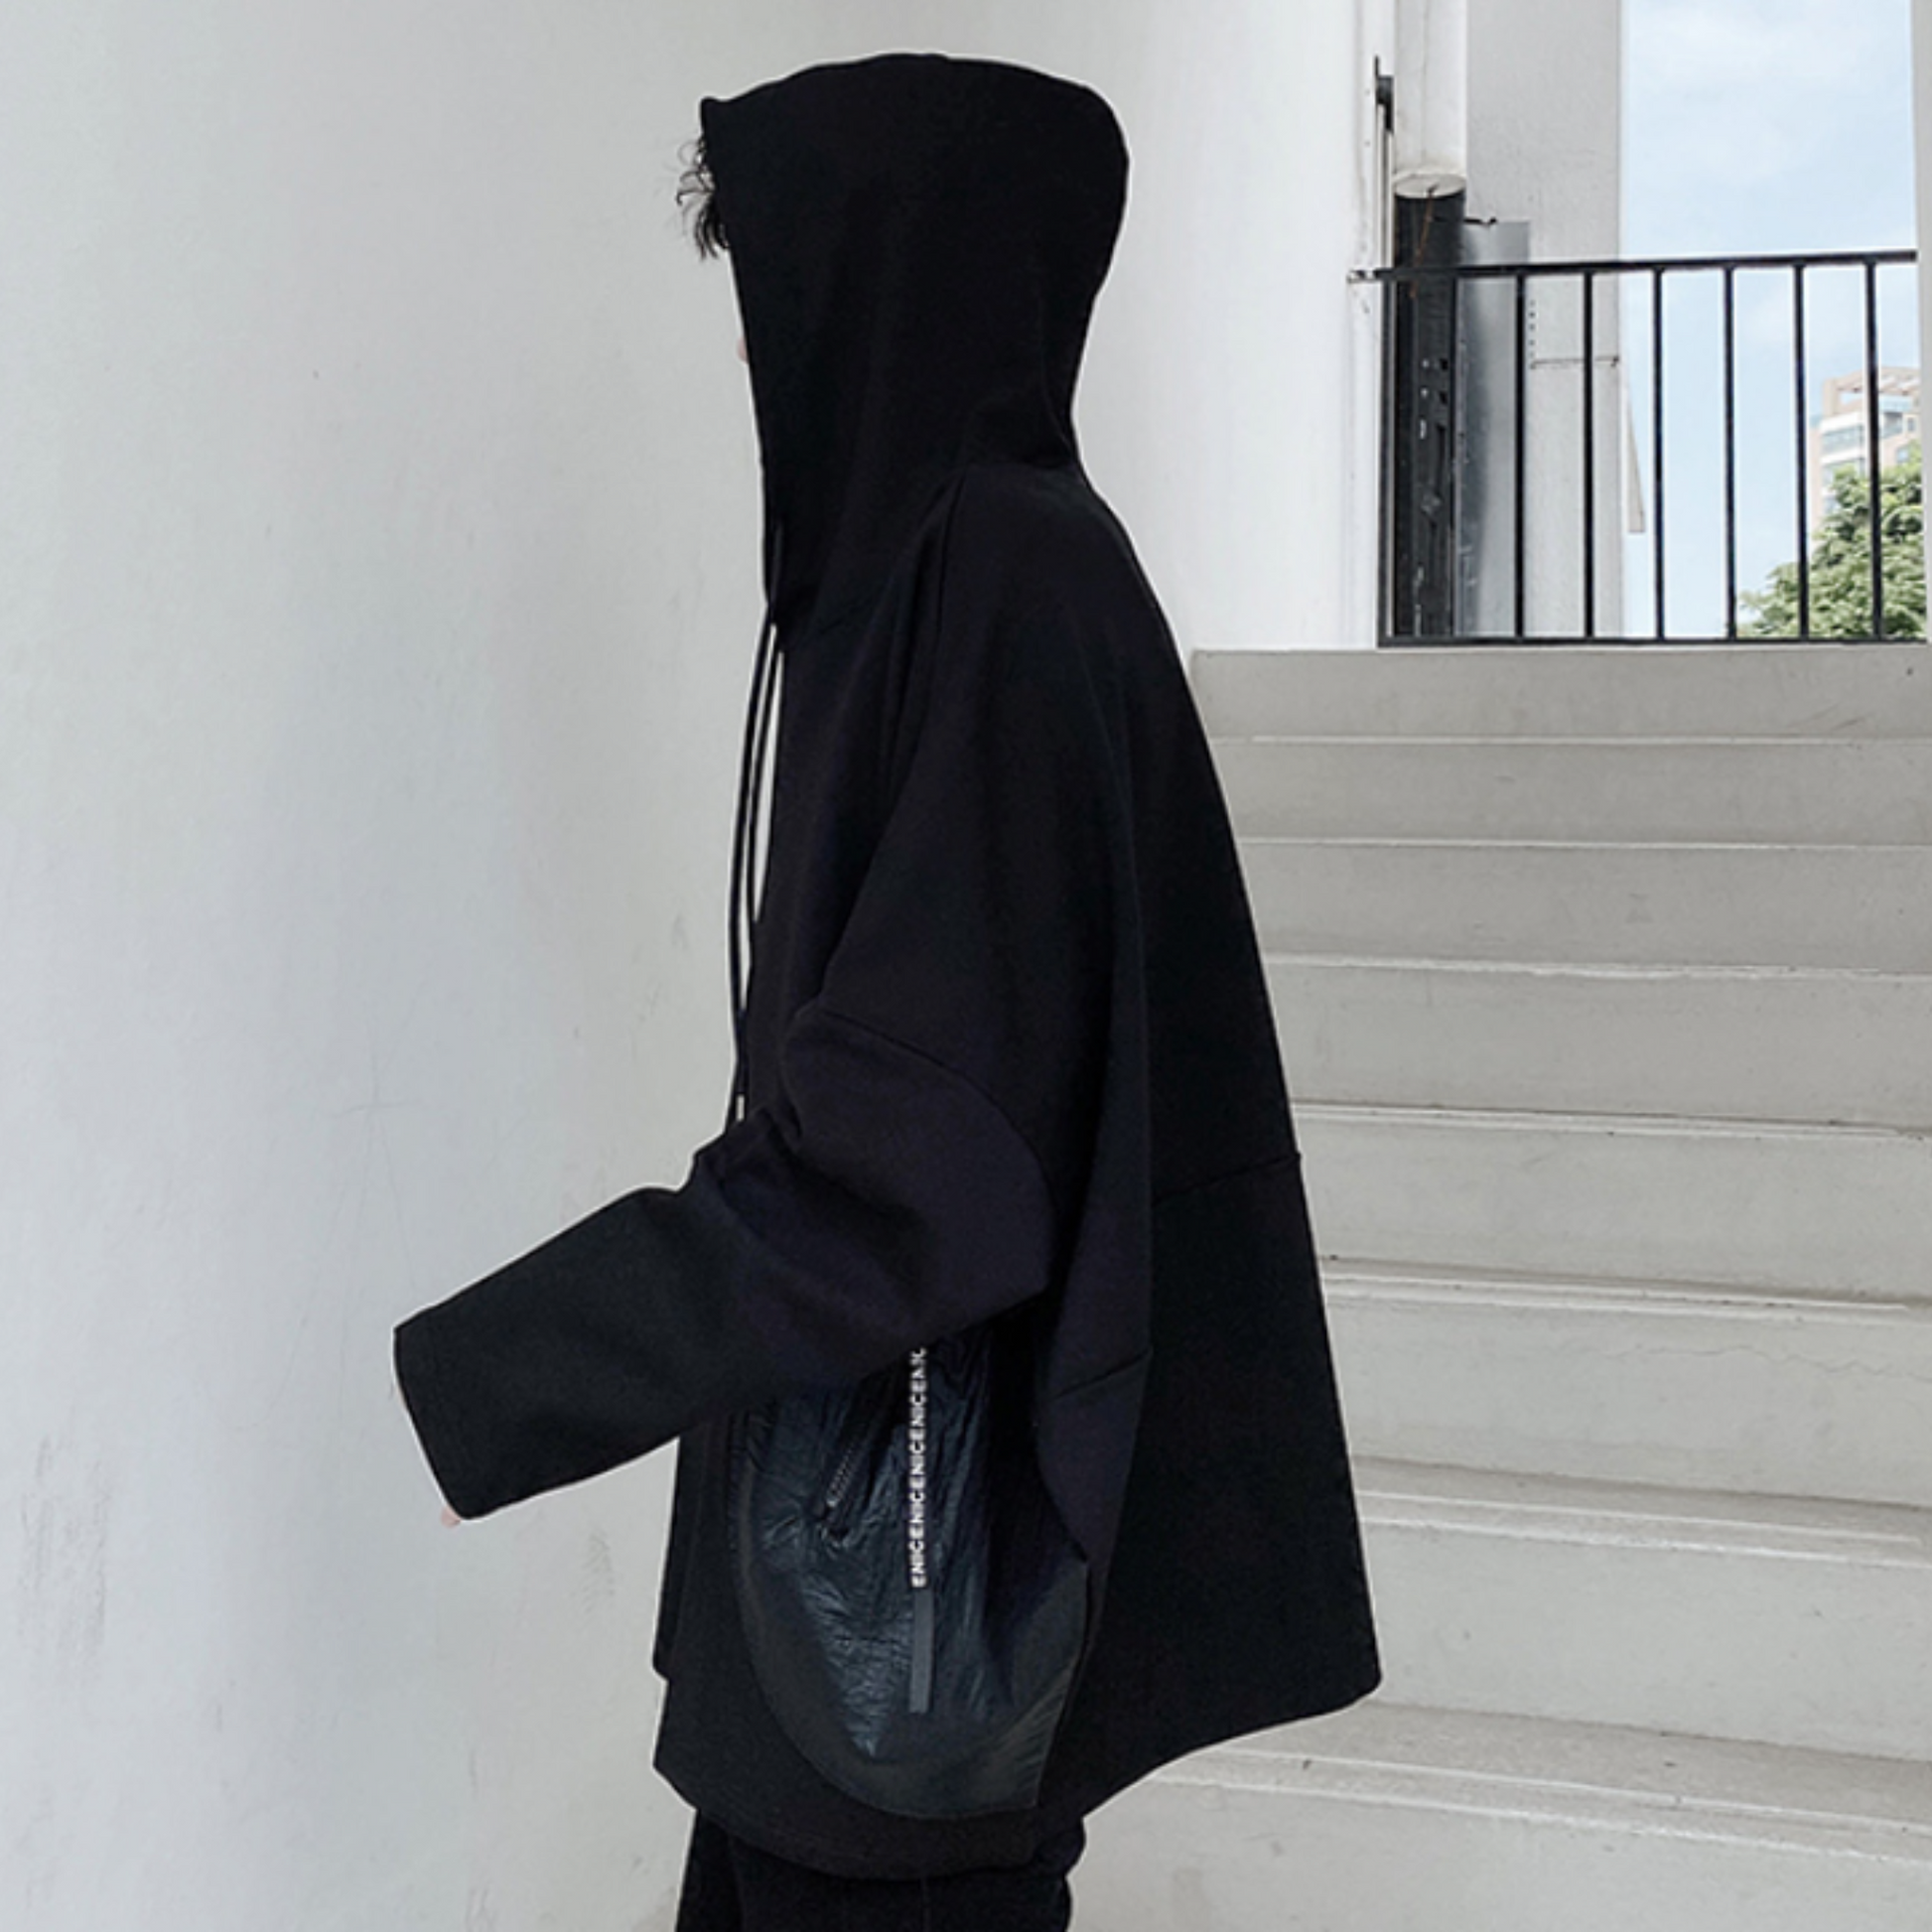 dark zip pocket hoodie EN434 – ELNERO